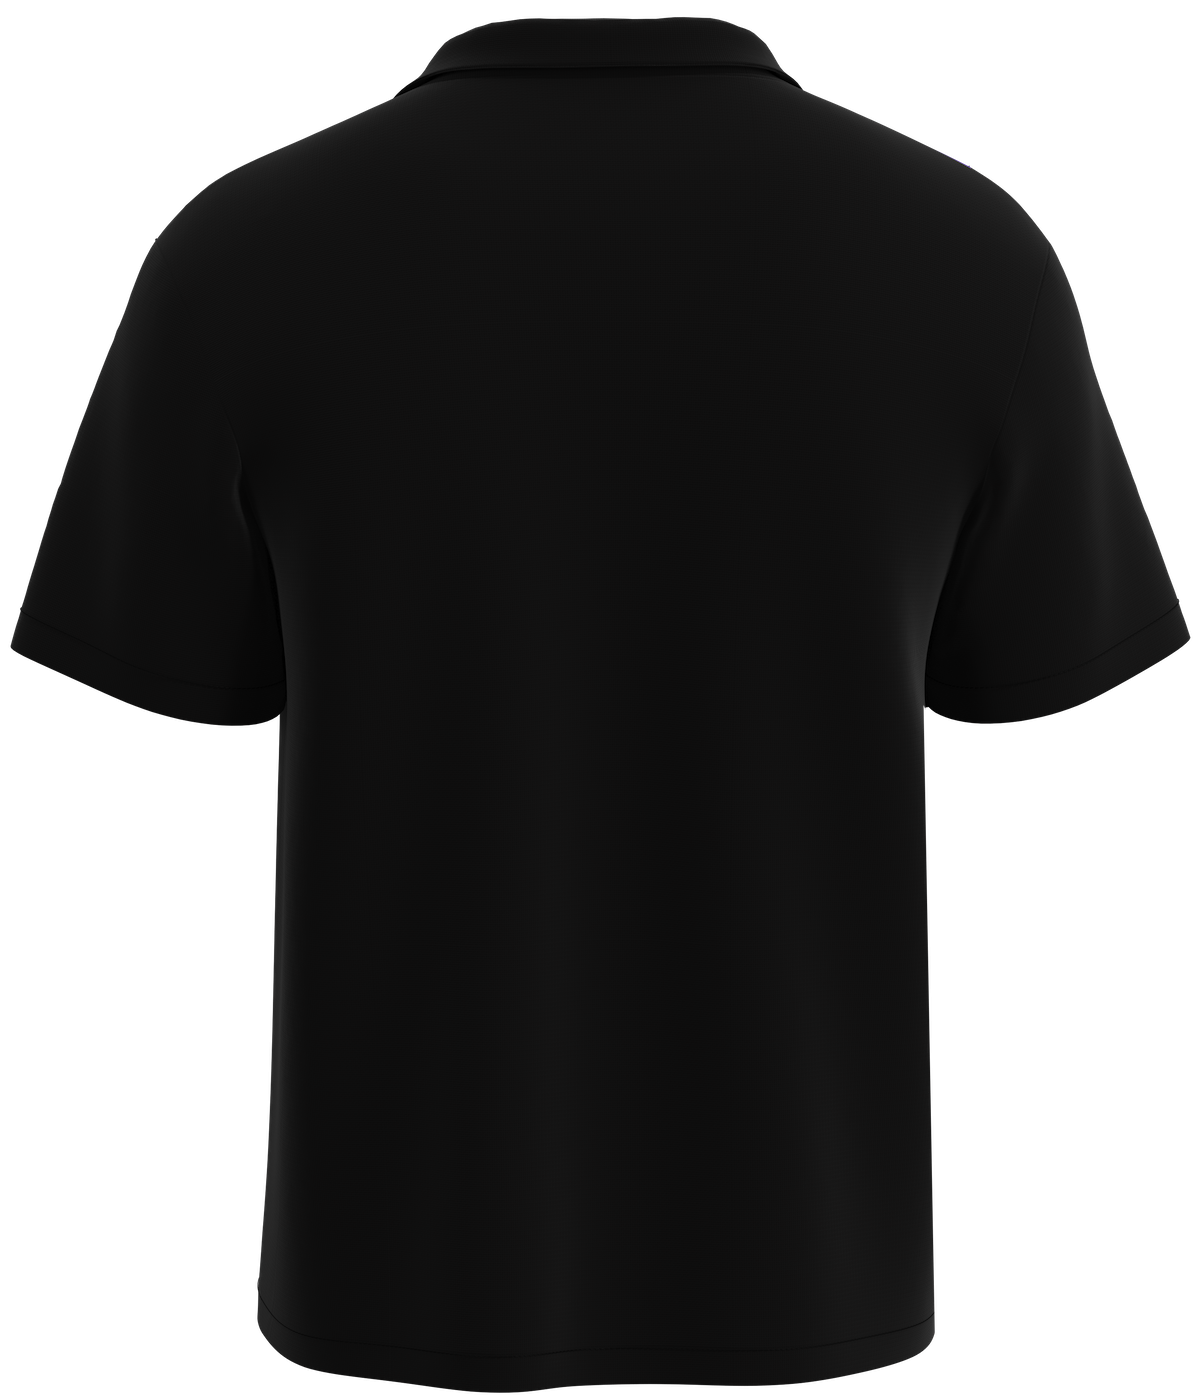 Retro Style Bowling Shirt | 50's Style Bowling Shirt